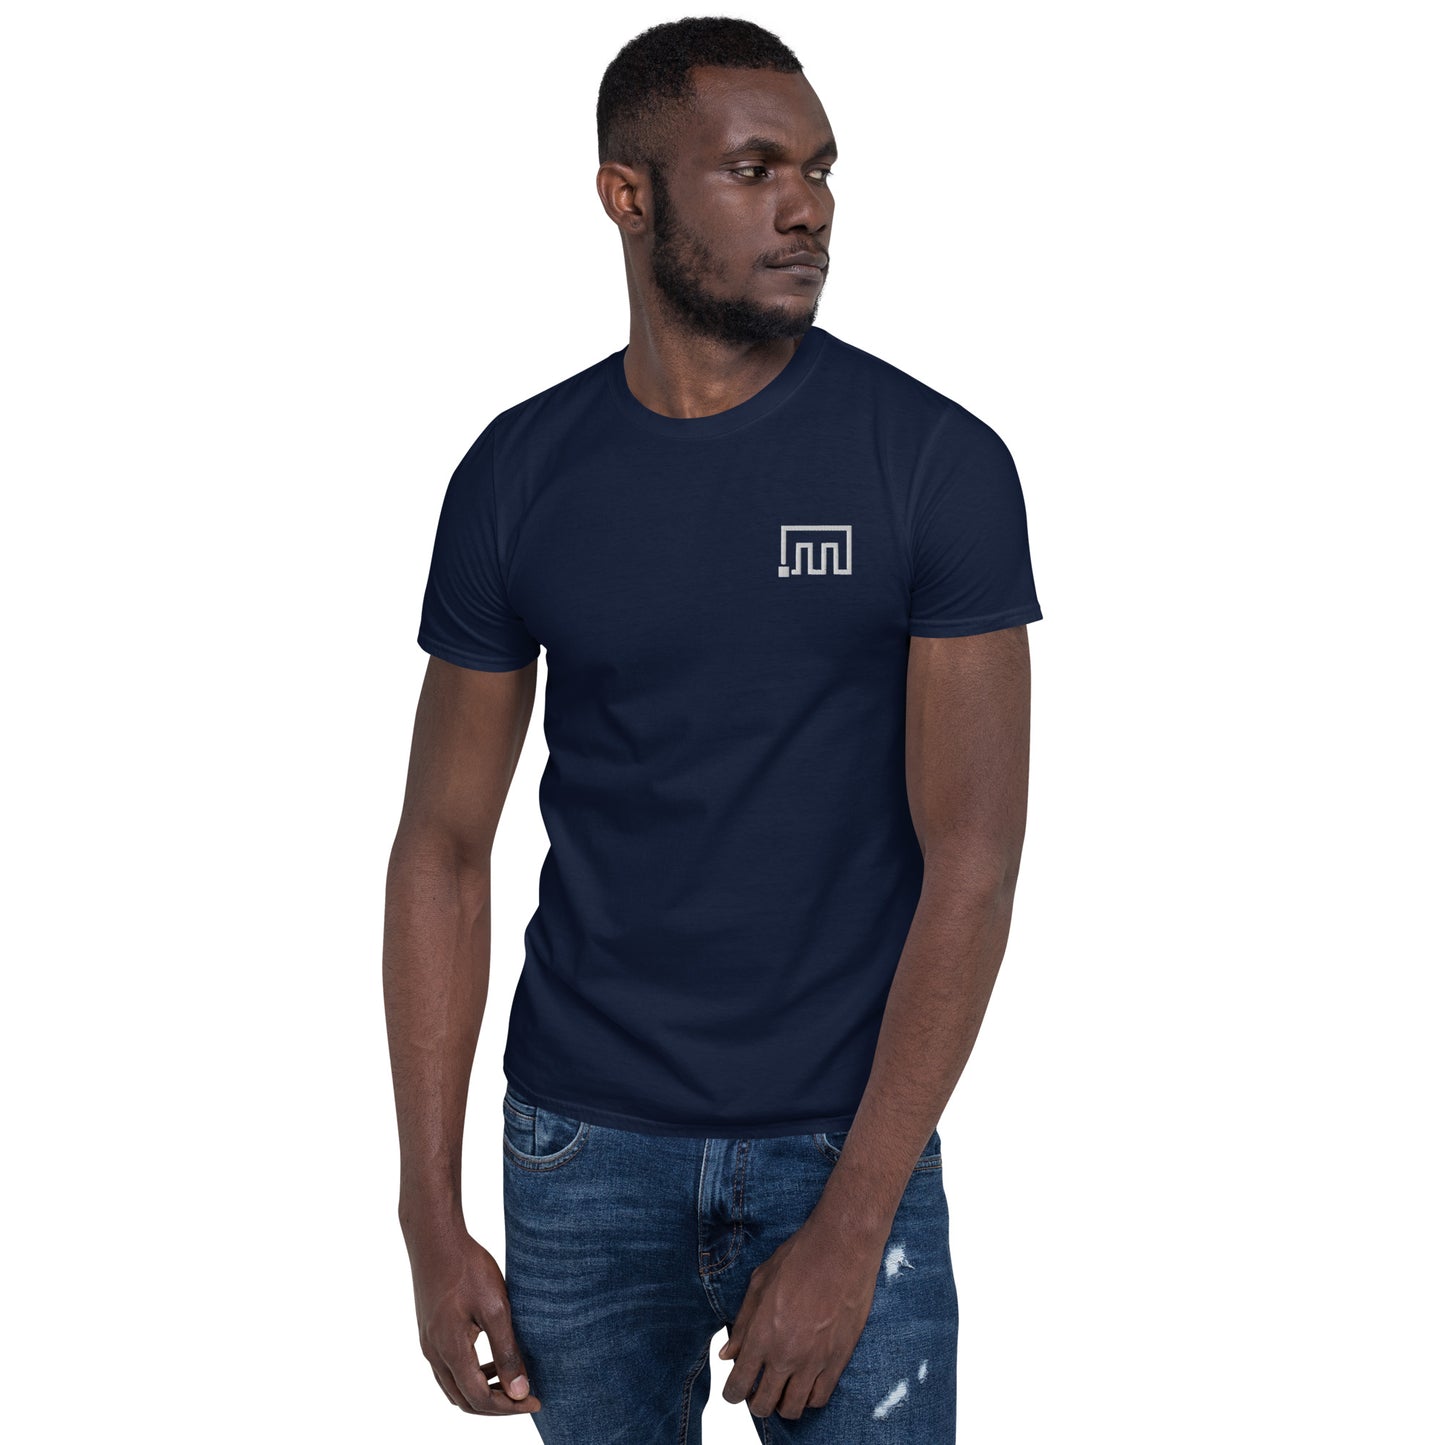 Matrixify Short-Sleeve Unisex T-Shirt